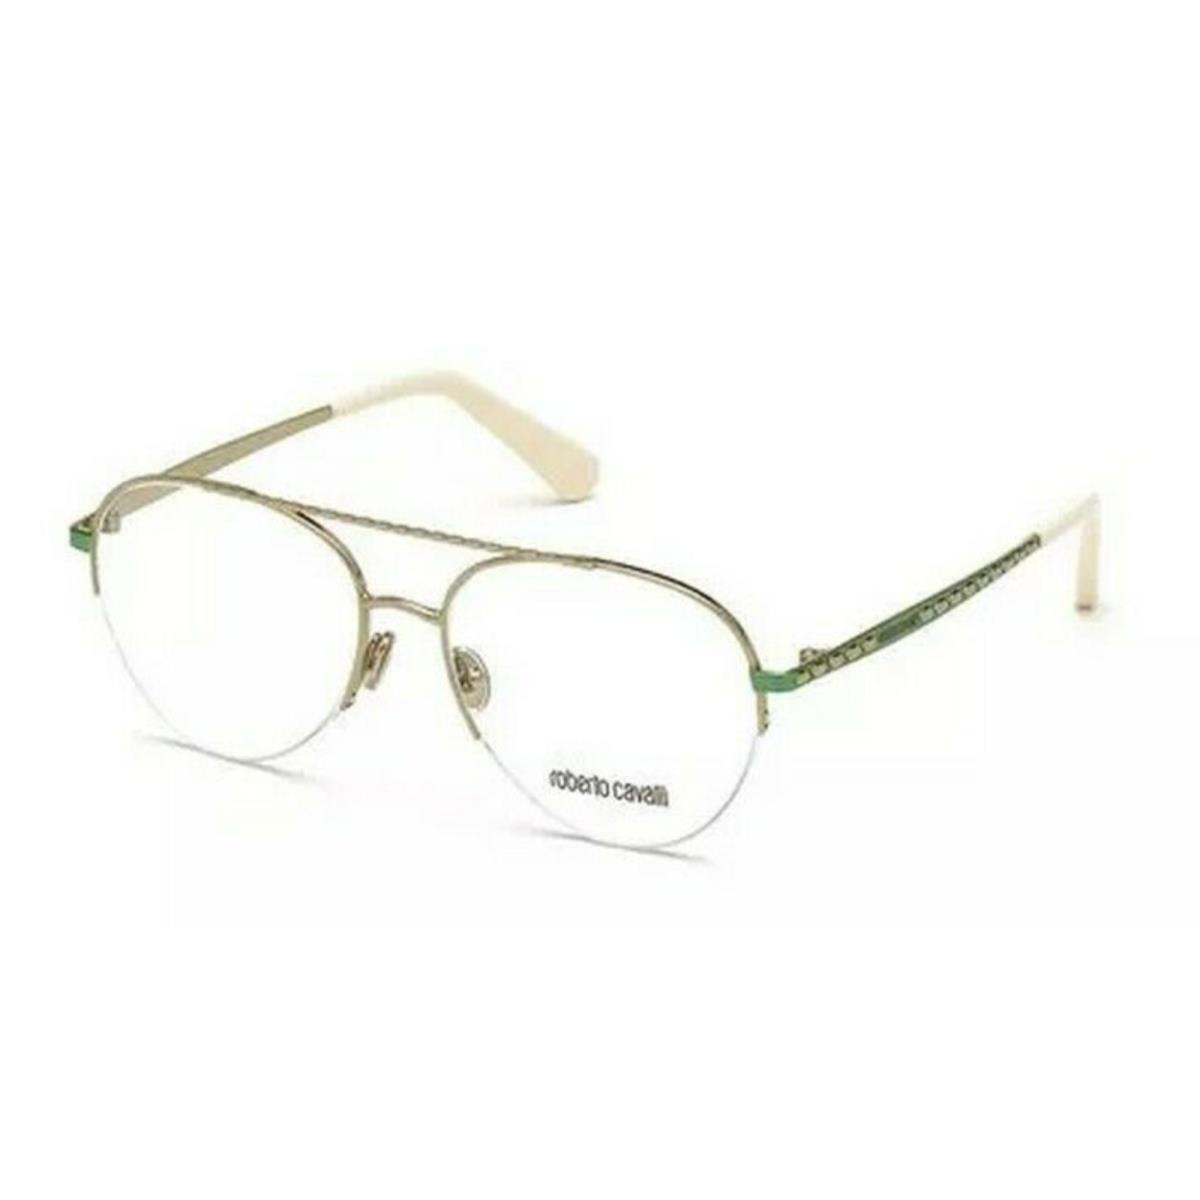 Roberto Cavalli Aviator Eyeglasses RC 5105 095 53-16 Gold White Frames